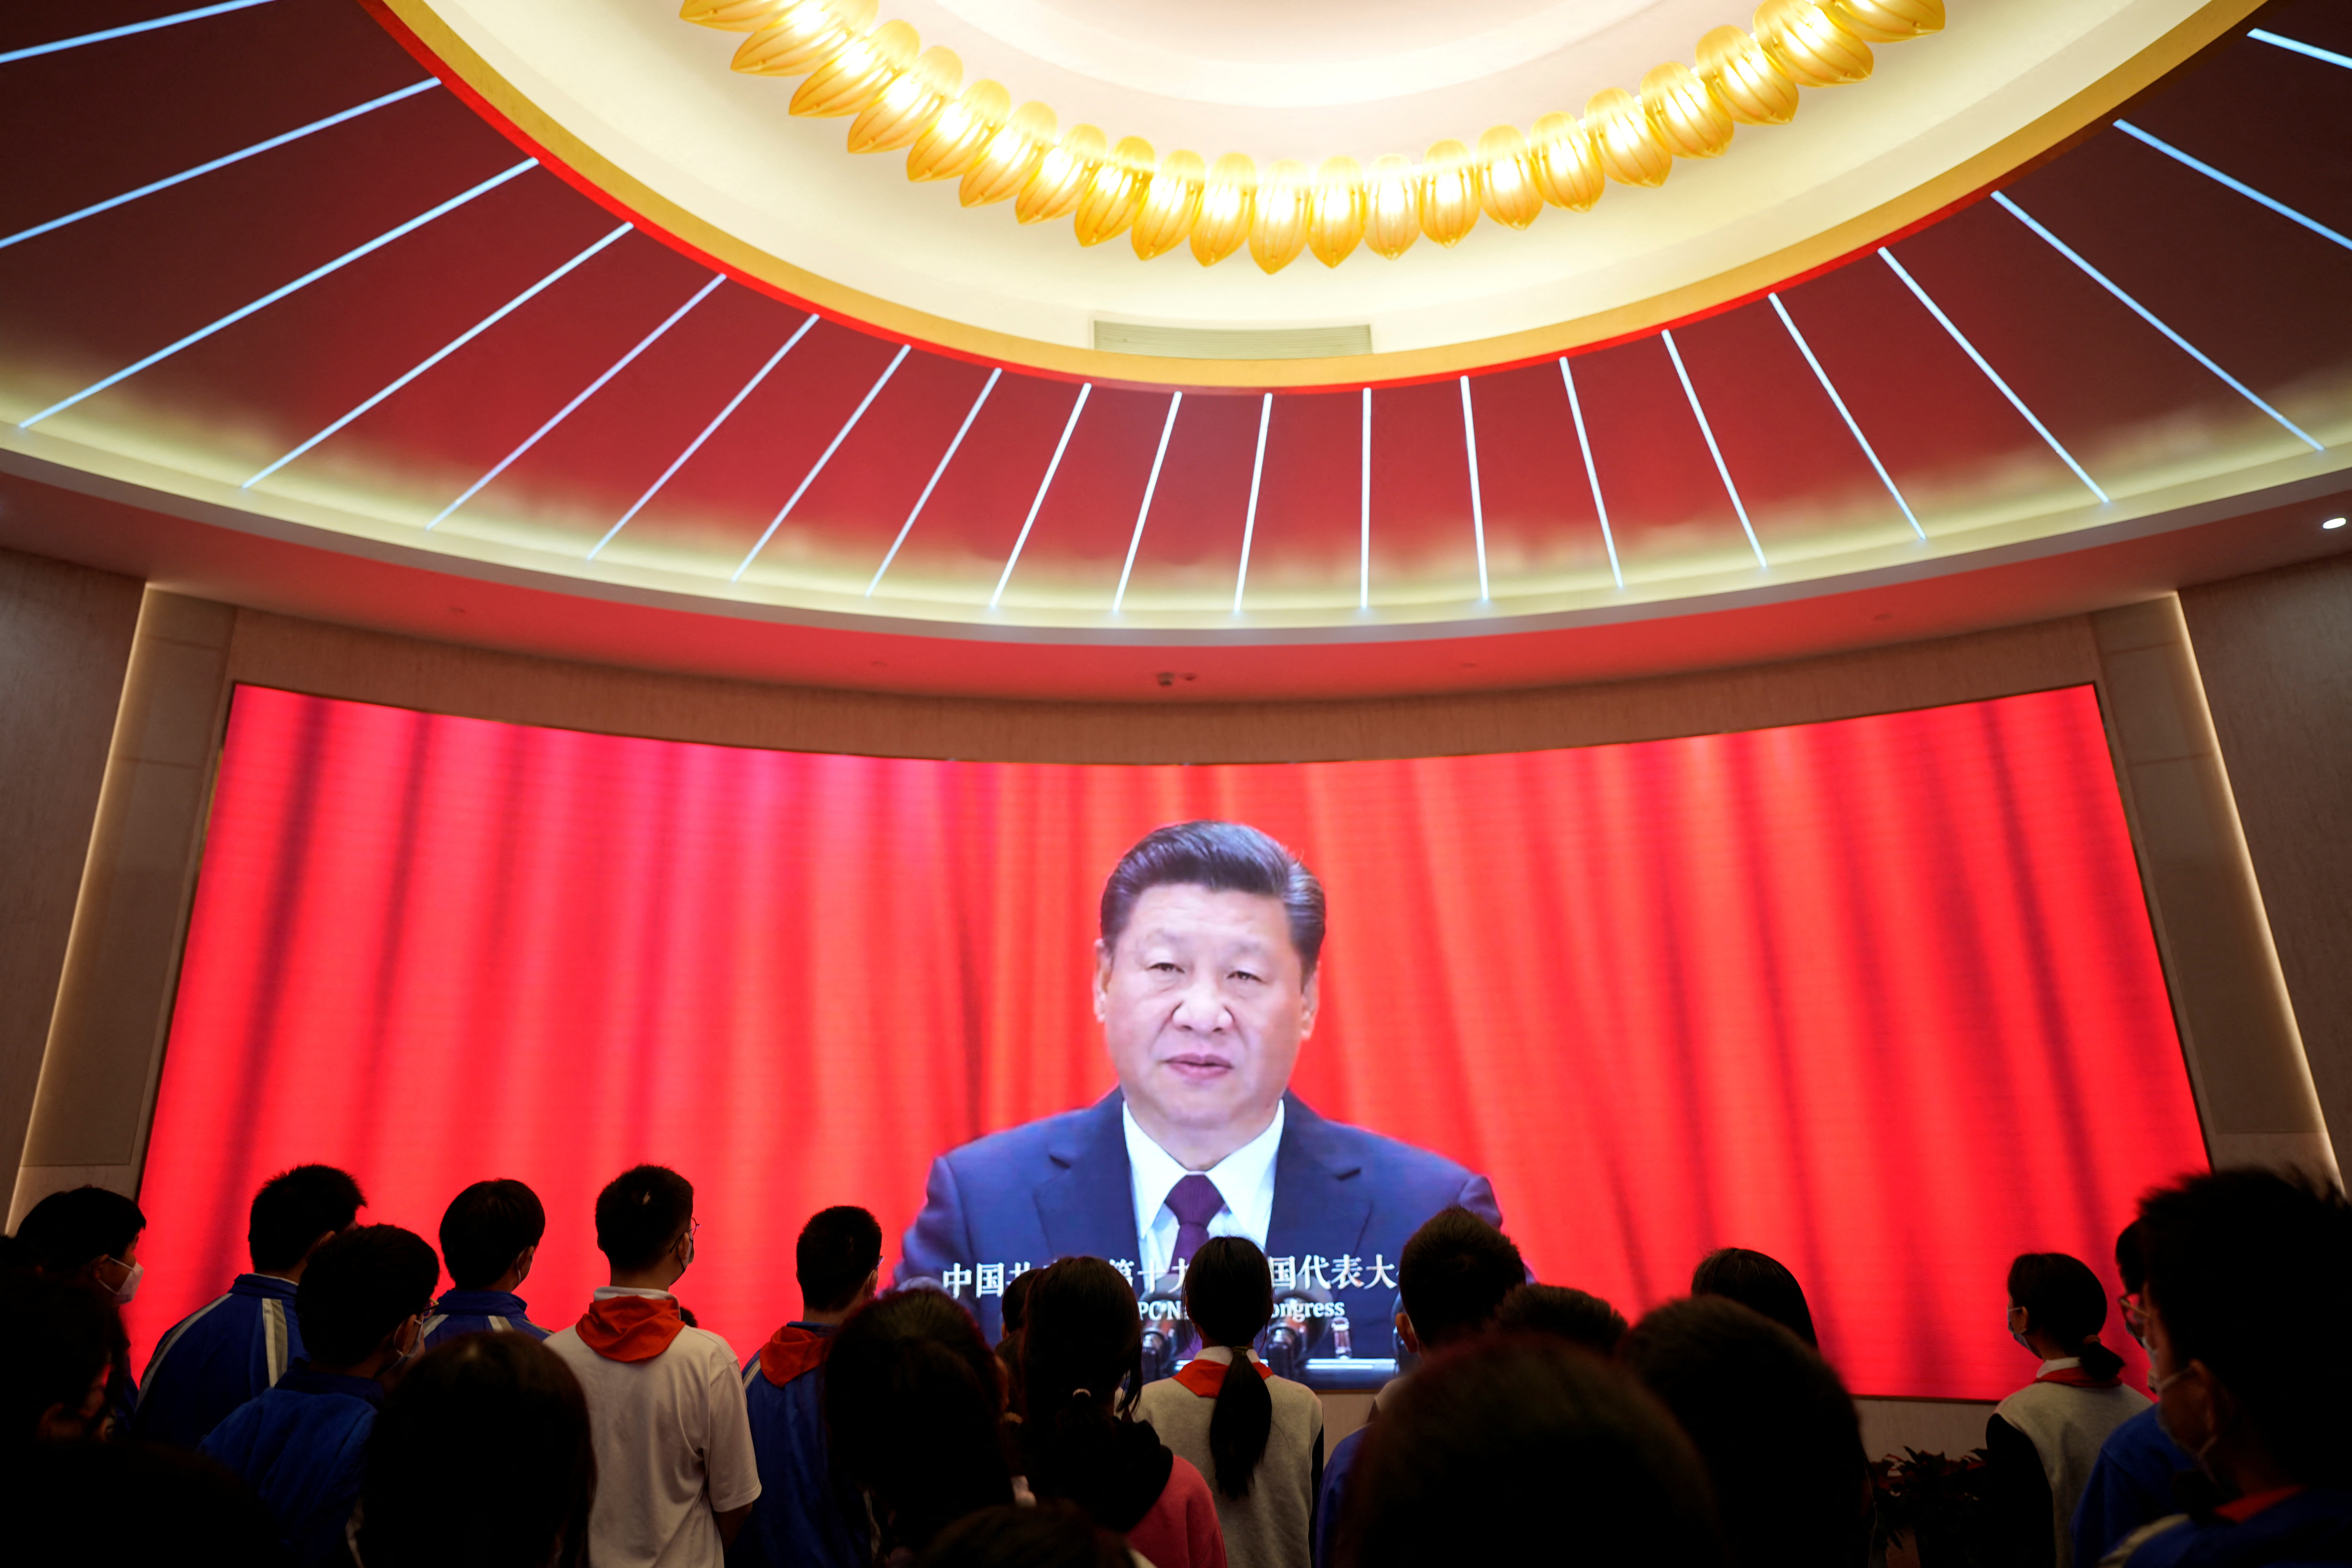 El régimen de Xi Jinping obtuvo su tercer mandato en China, ejerciendo su férreo control en la política del país. (REUTERS)